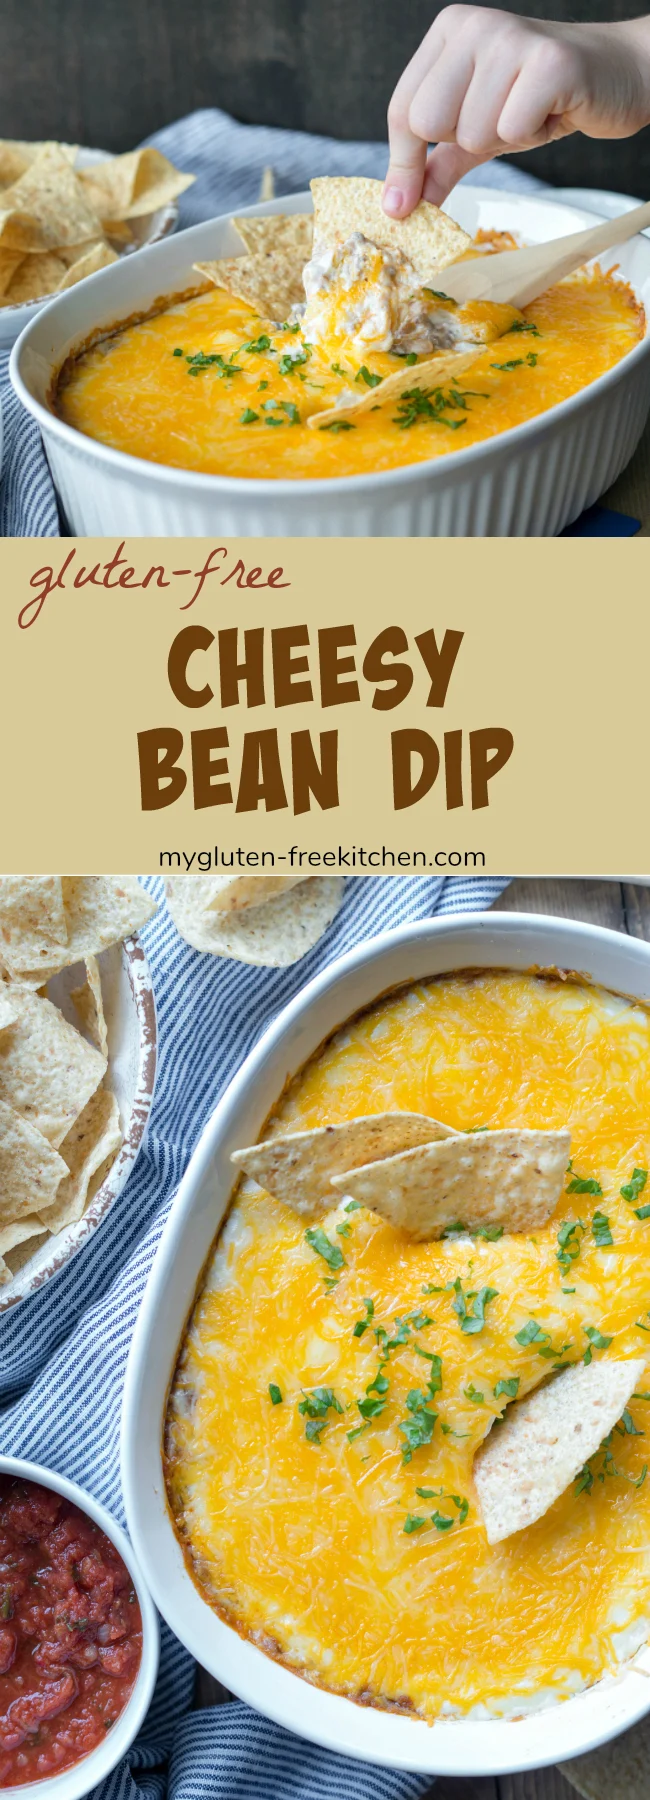 Gluten-free Cheesy Bean Dip recipe